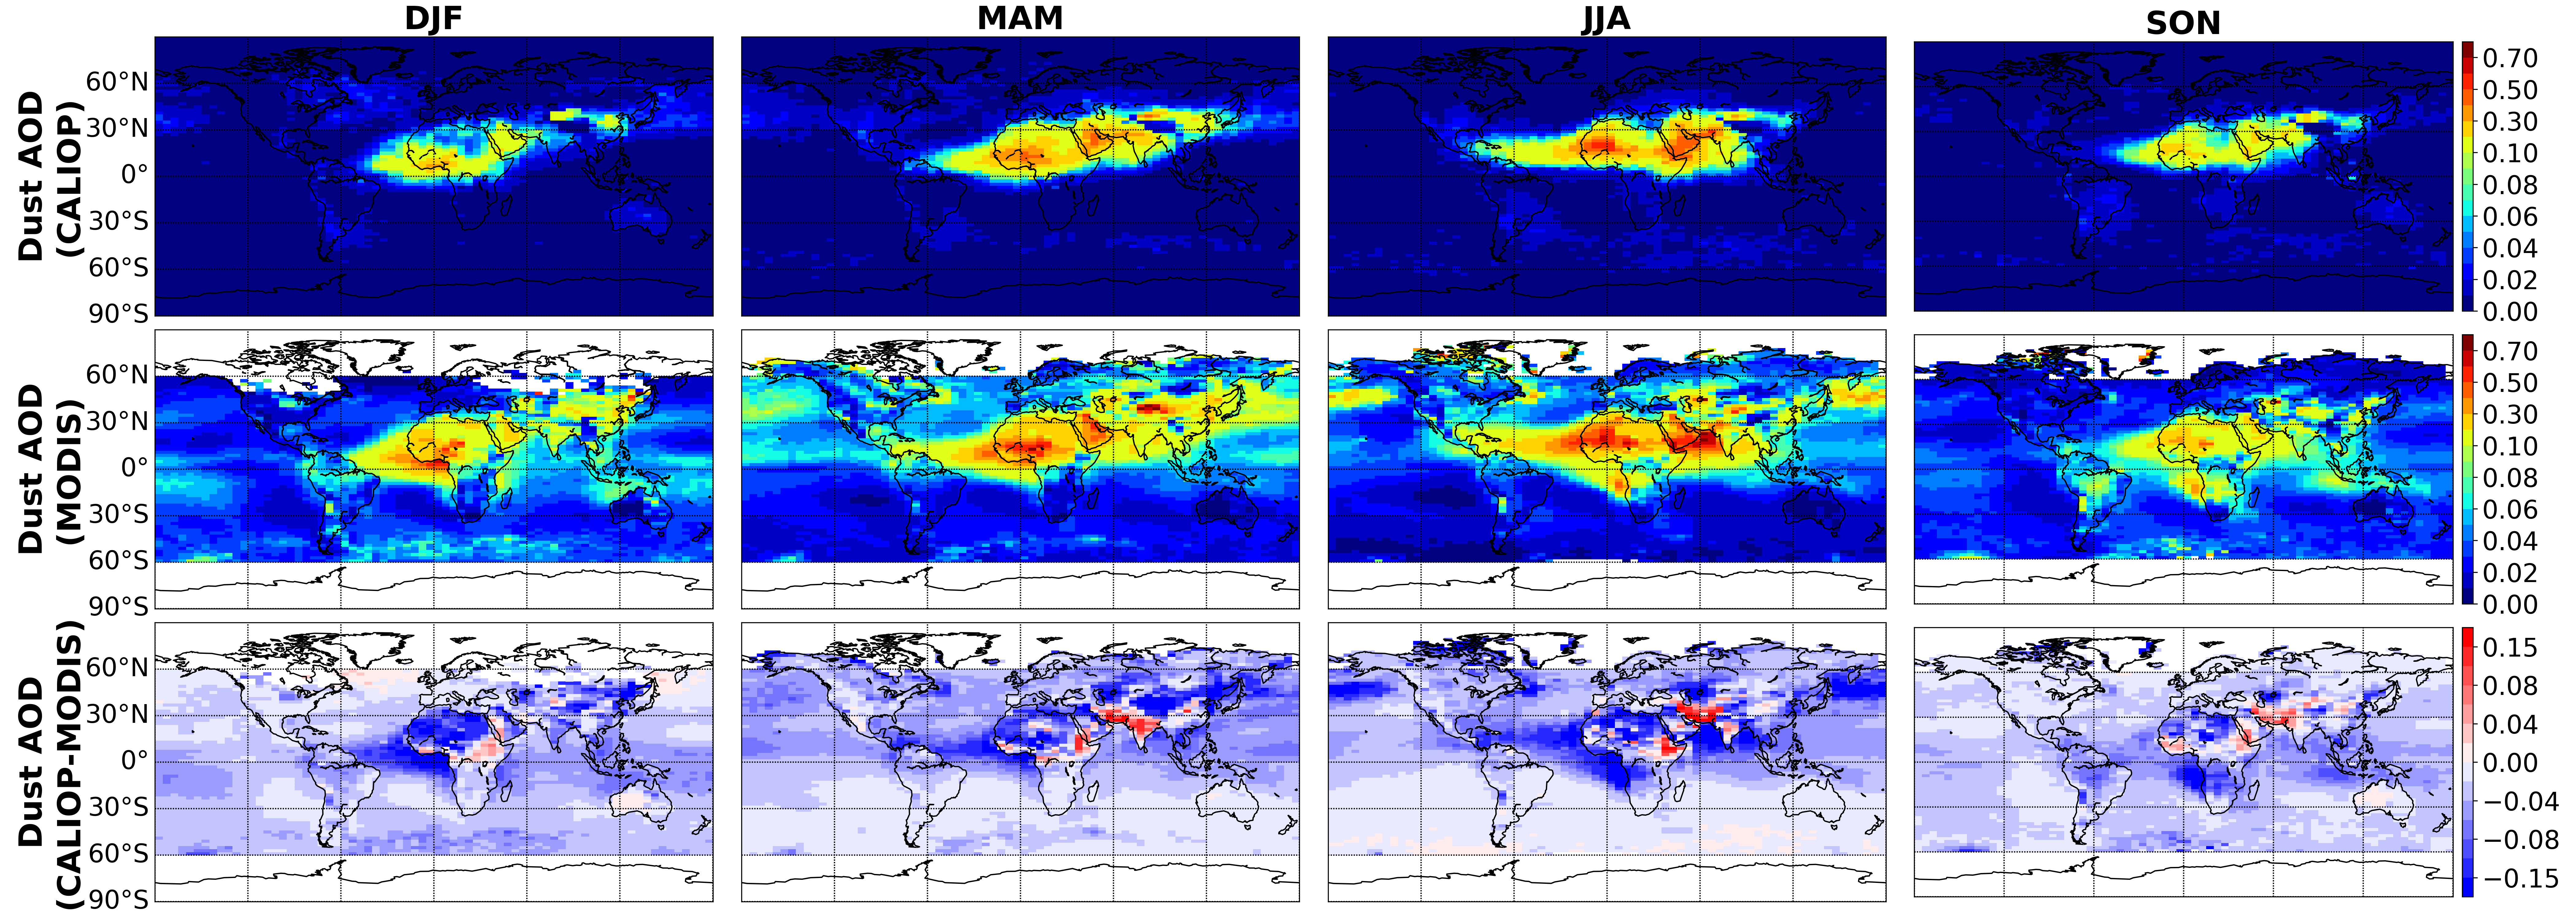 New dust optical depth climatology released (Song et al. 2021)